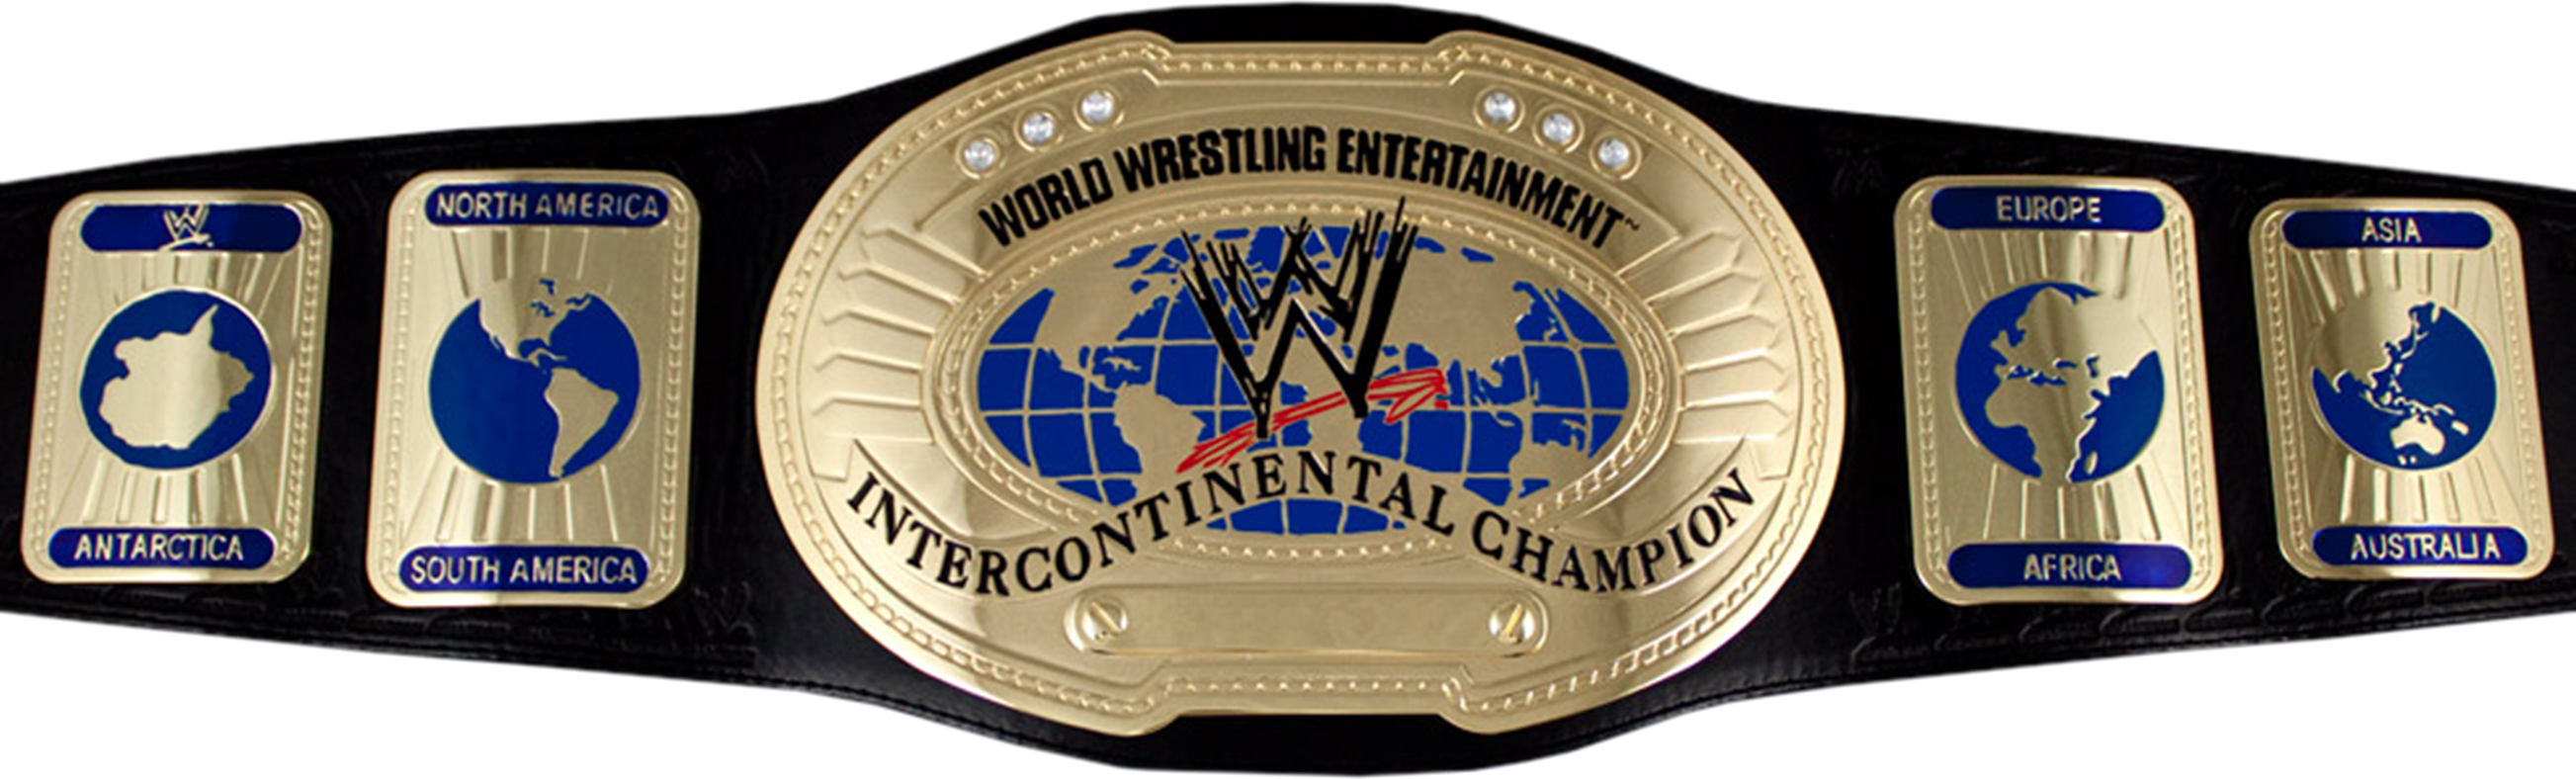 1998 Intercontinental Cup - Wikipedia